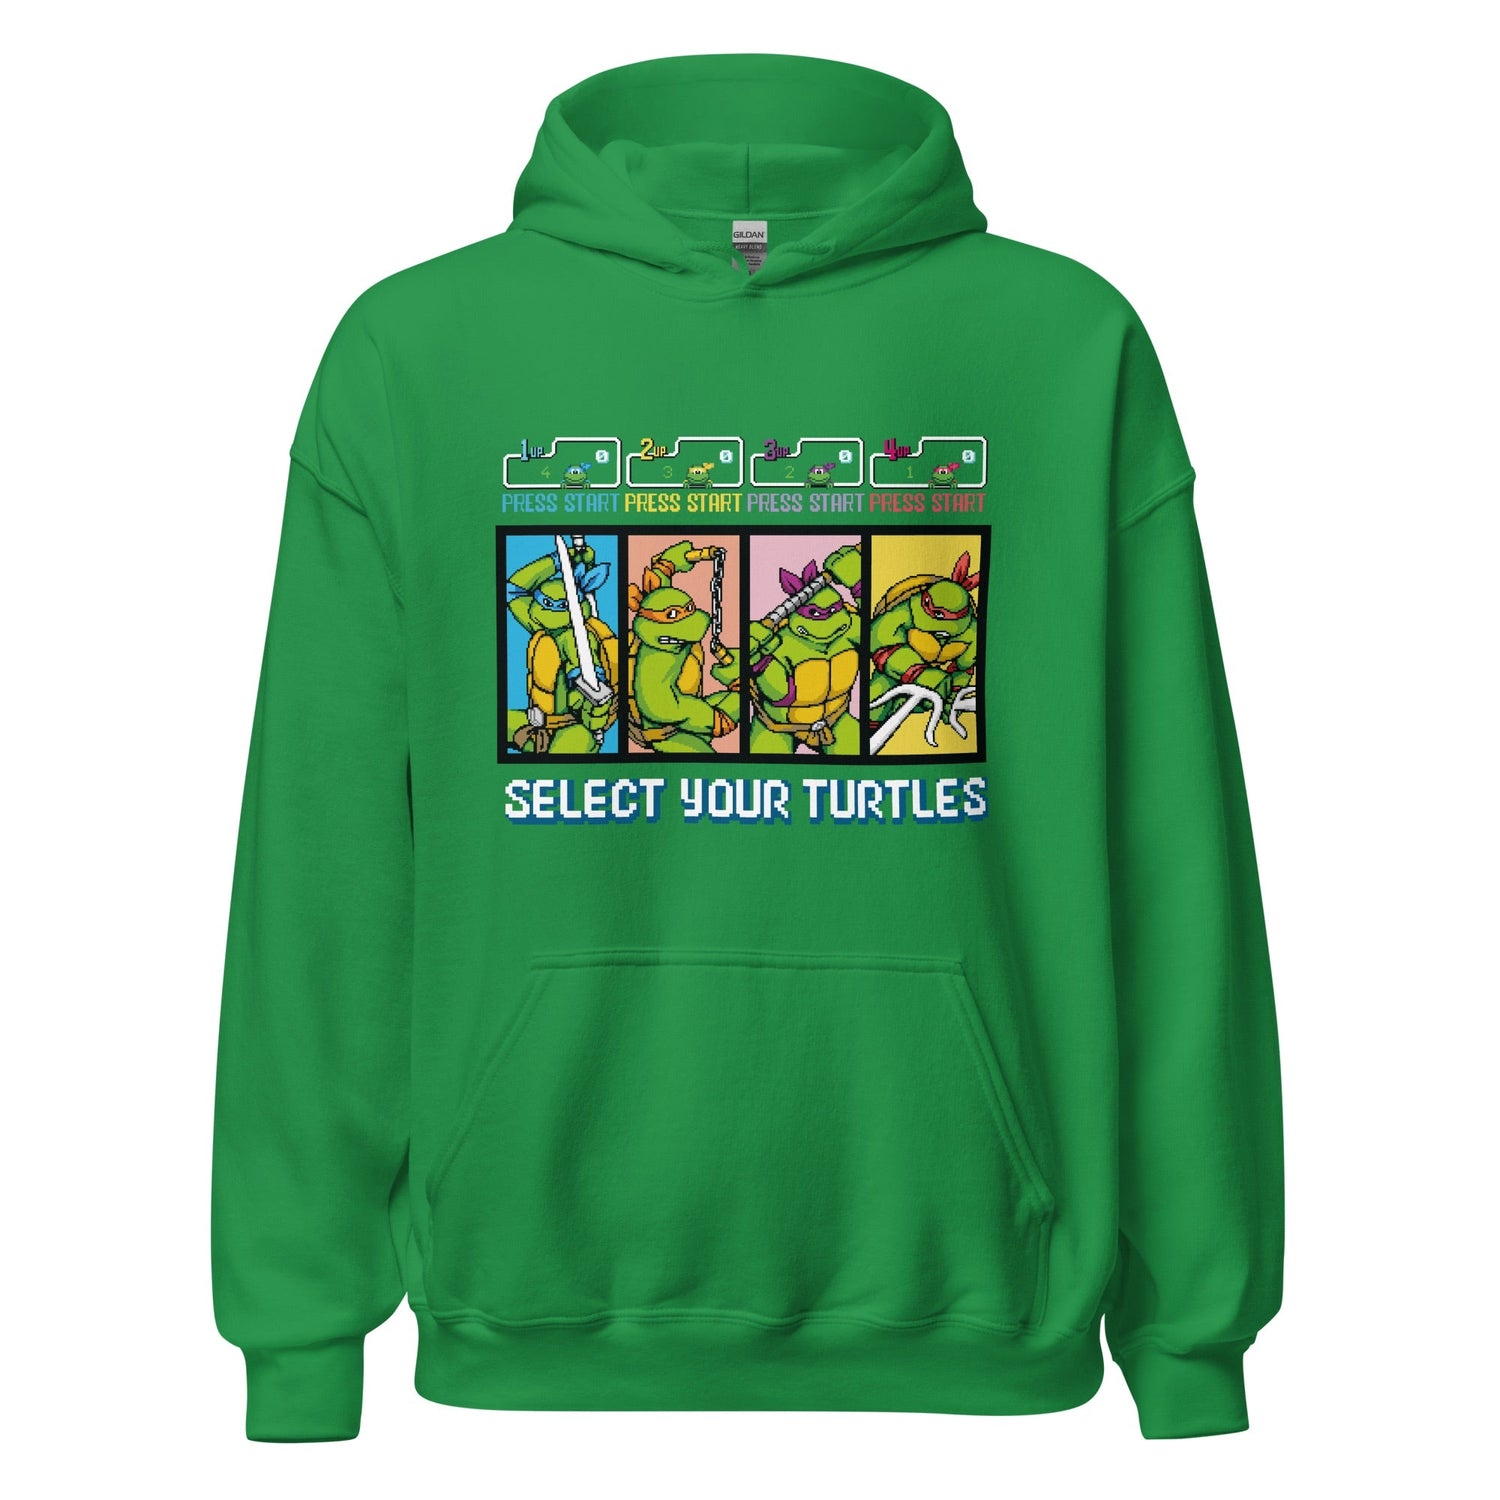 Teenage Mutant Ninja Turtles Select Your Turtles Hooded Sweatshirt - Paramount Shop